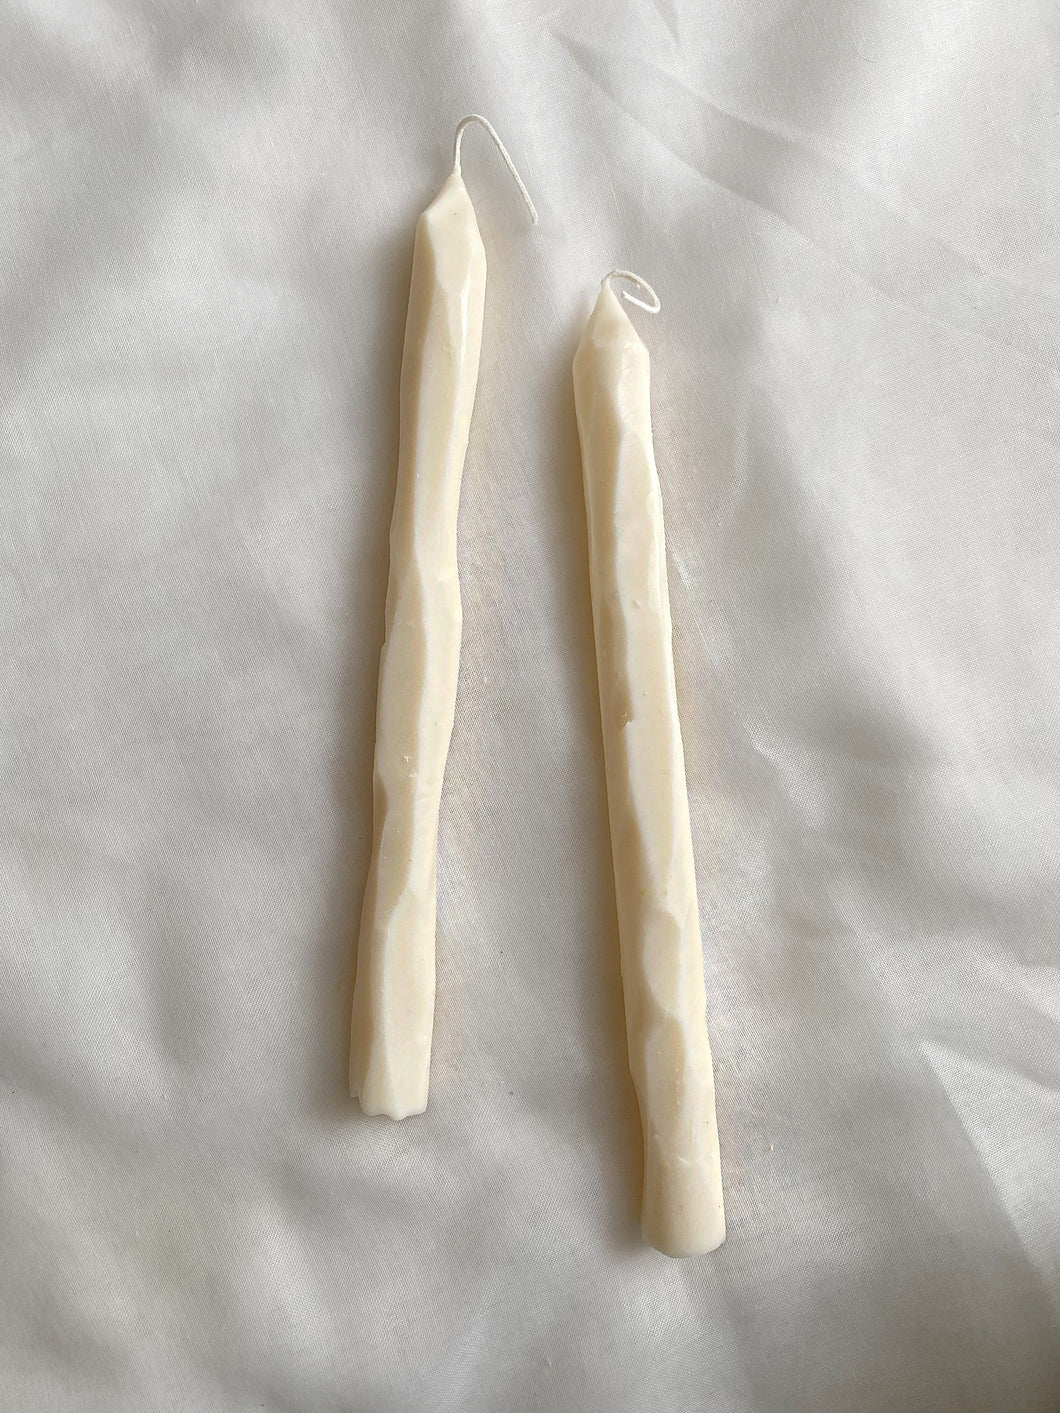 Hand Carved White Candlesticks Set